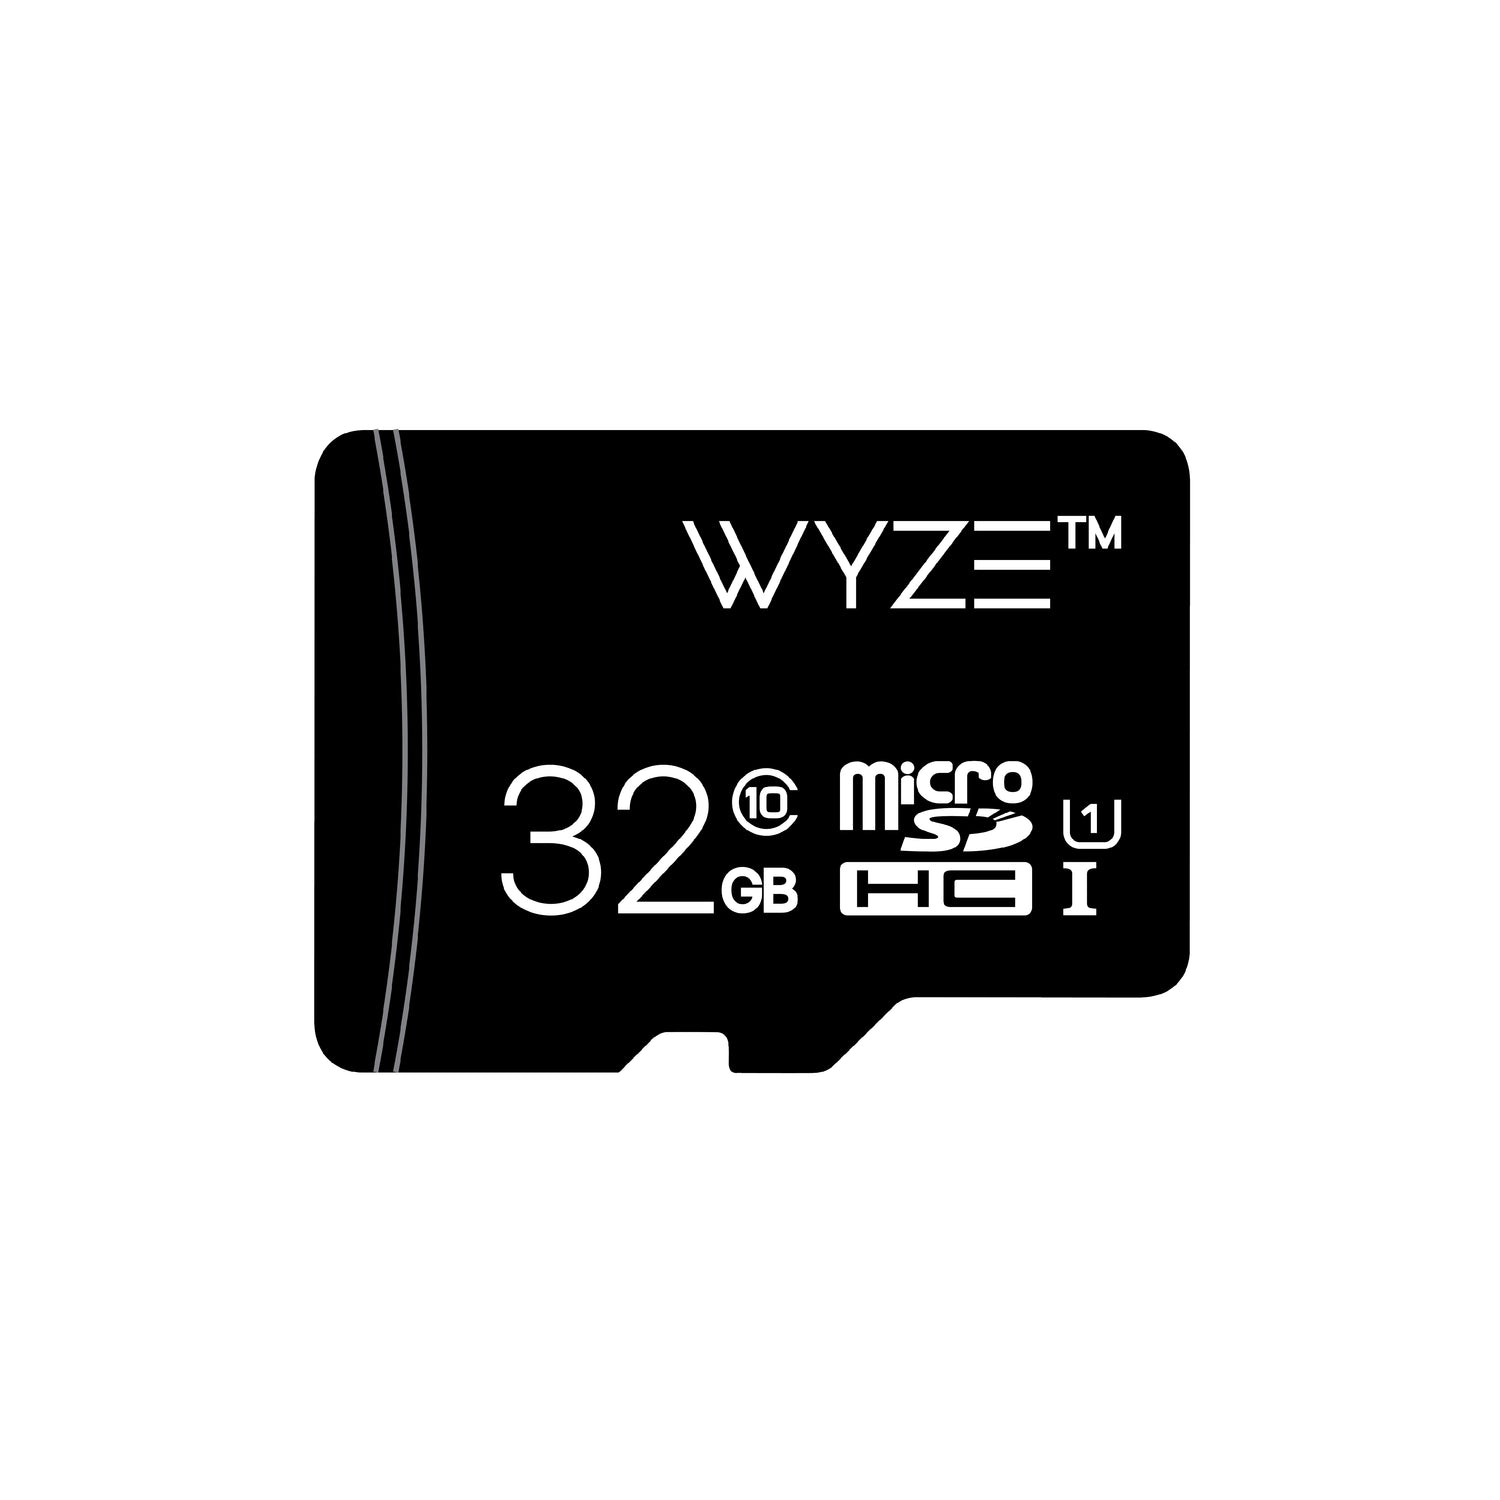 munt regeling Gevoel van schuld Wyze MicroSD Card - 256GB, 128GB, and 32GB